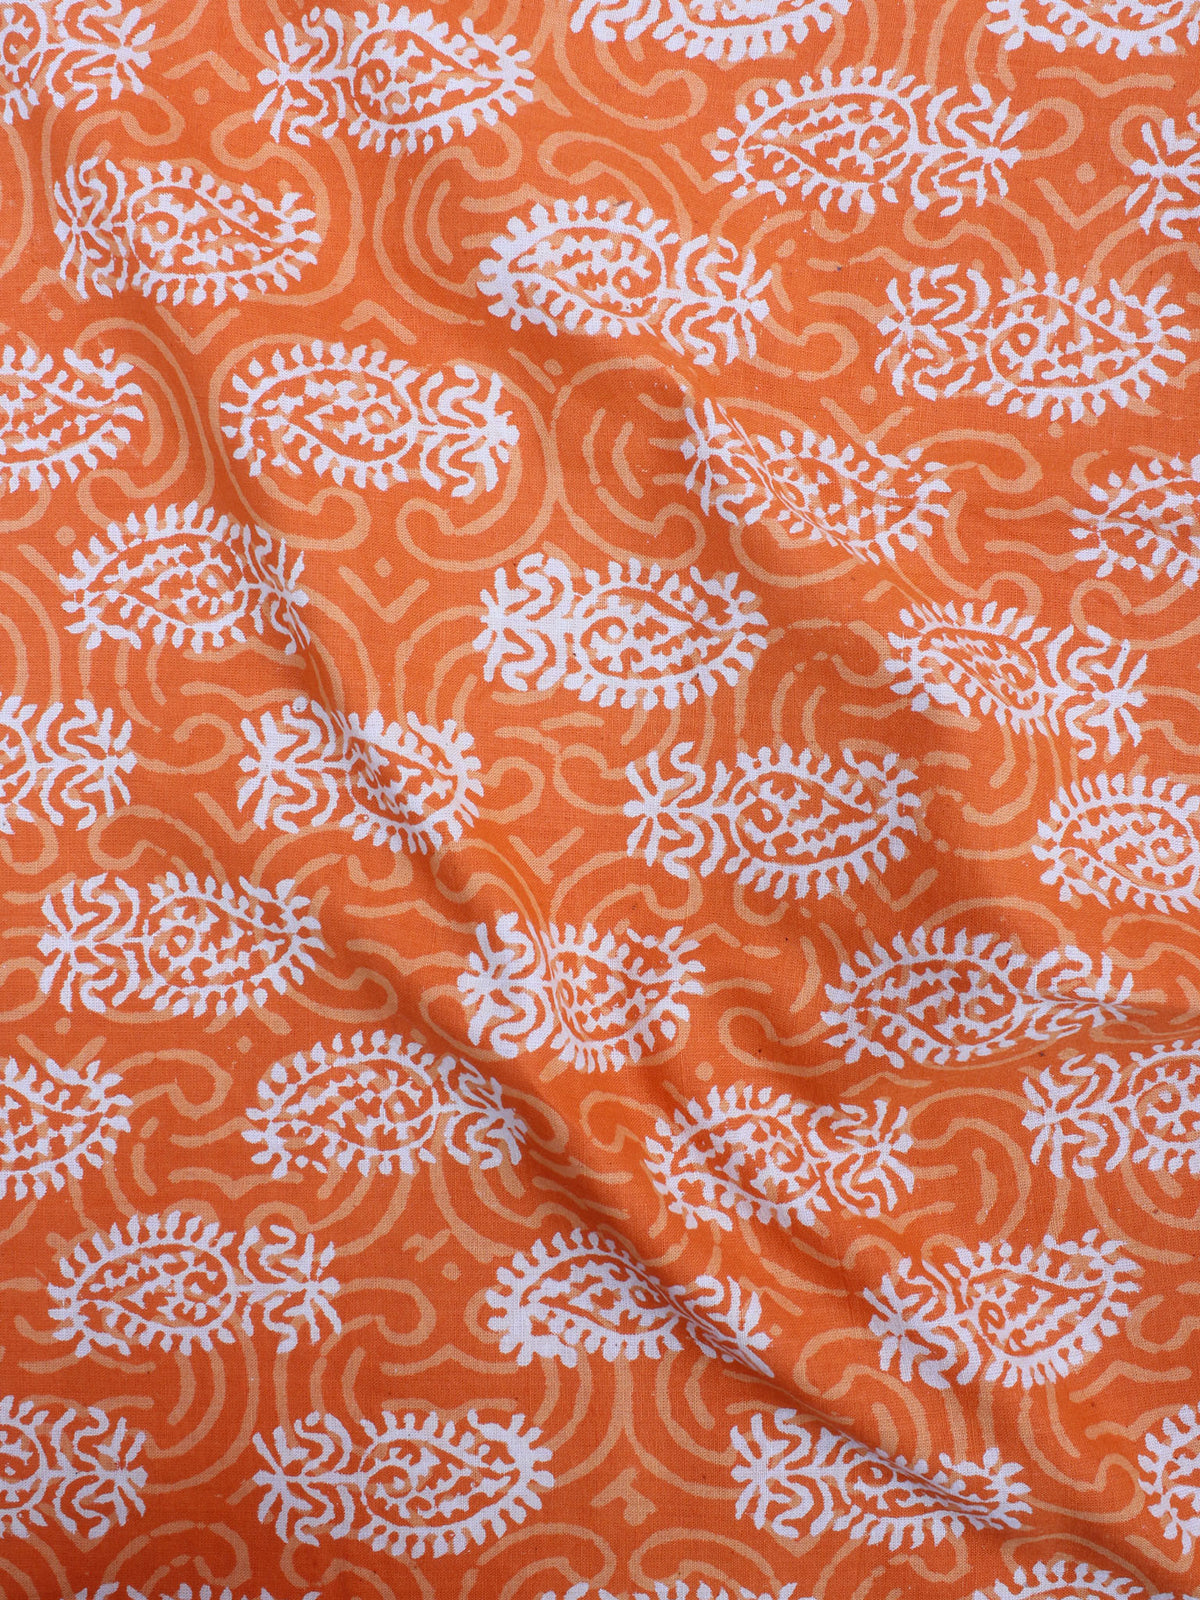 Orange Beige Bagru Hand Block Printed Cotton Fabric Per Meter - F0916182